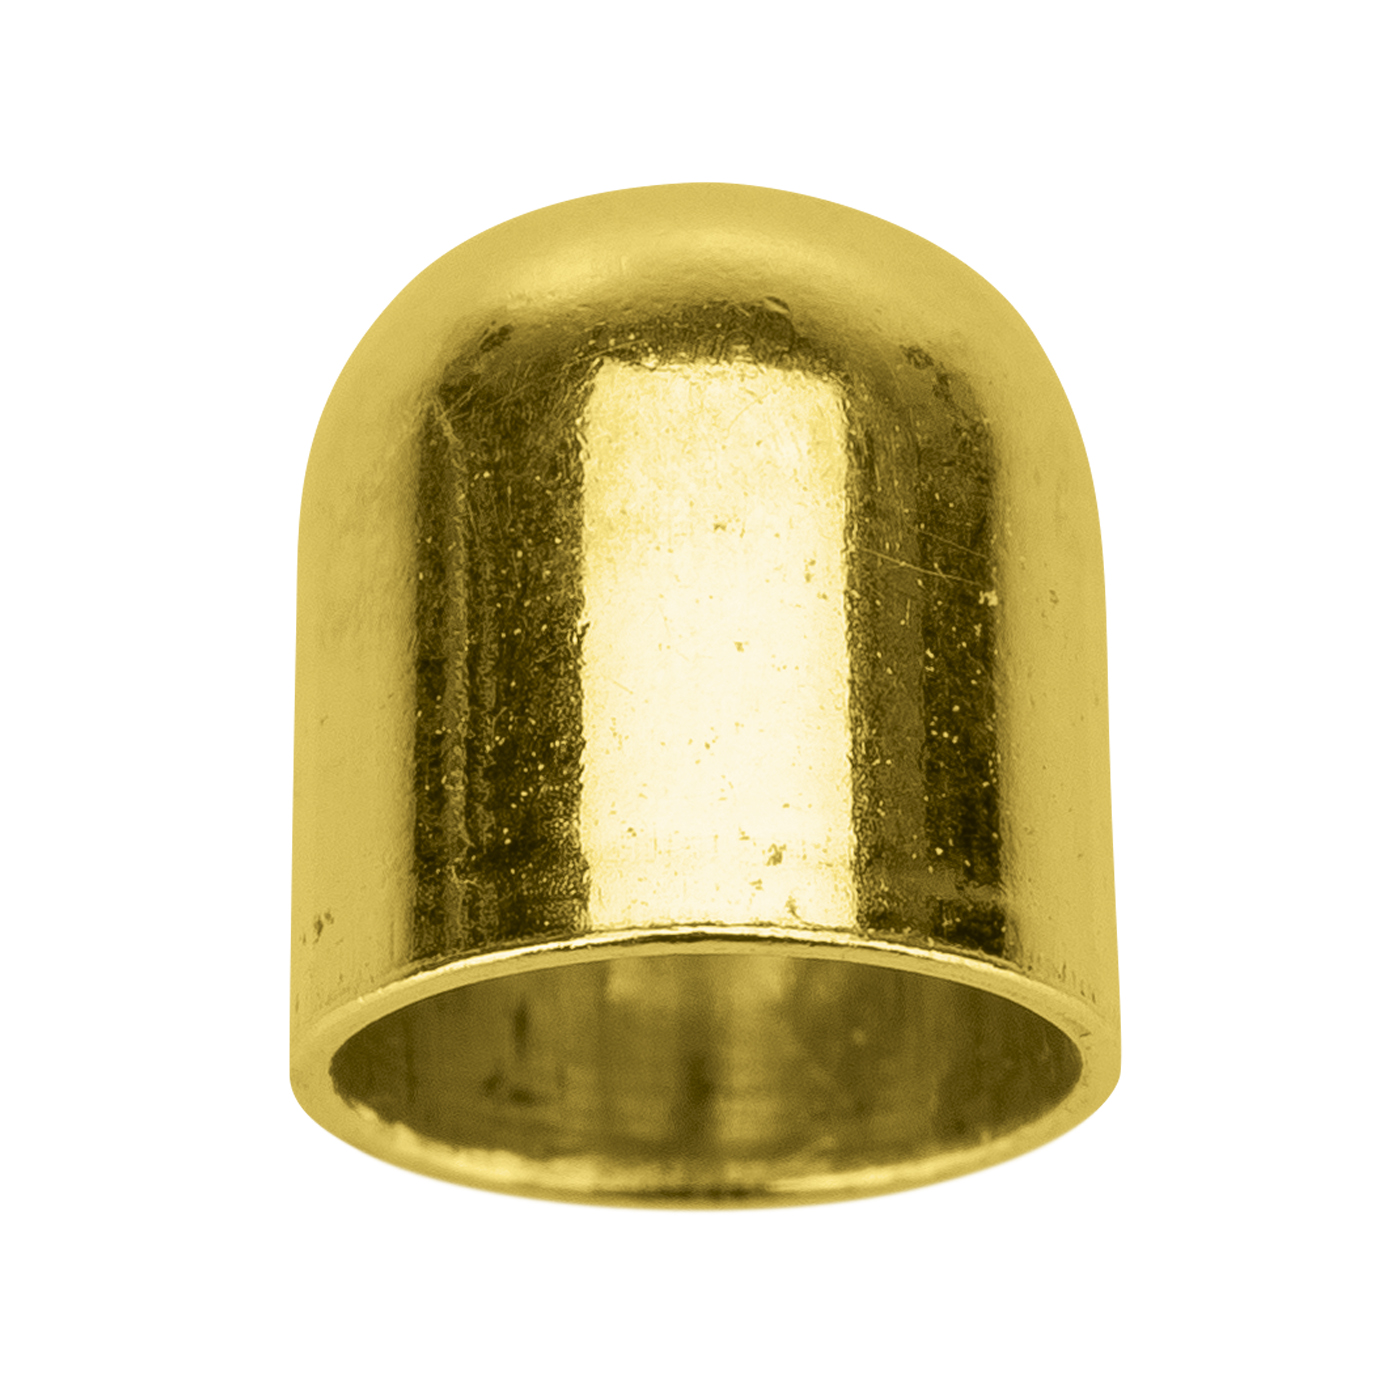 Endkappe, 925 Ag vergoldet, ø 5,4 mm, ohne Öse - 1 Stück